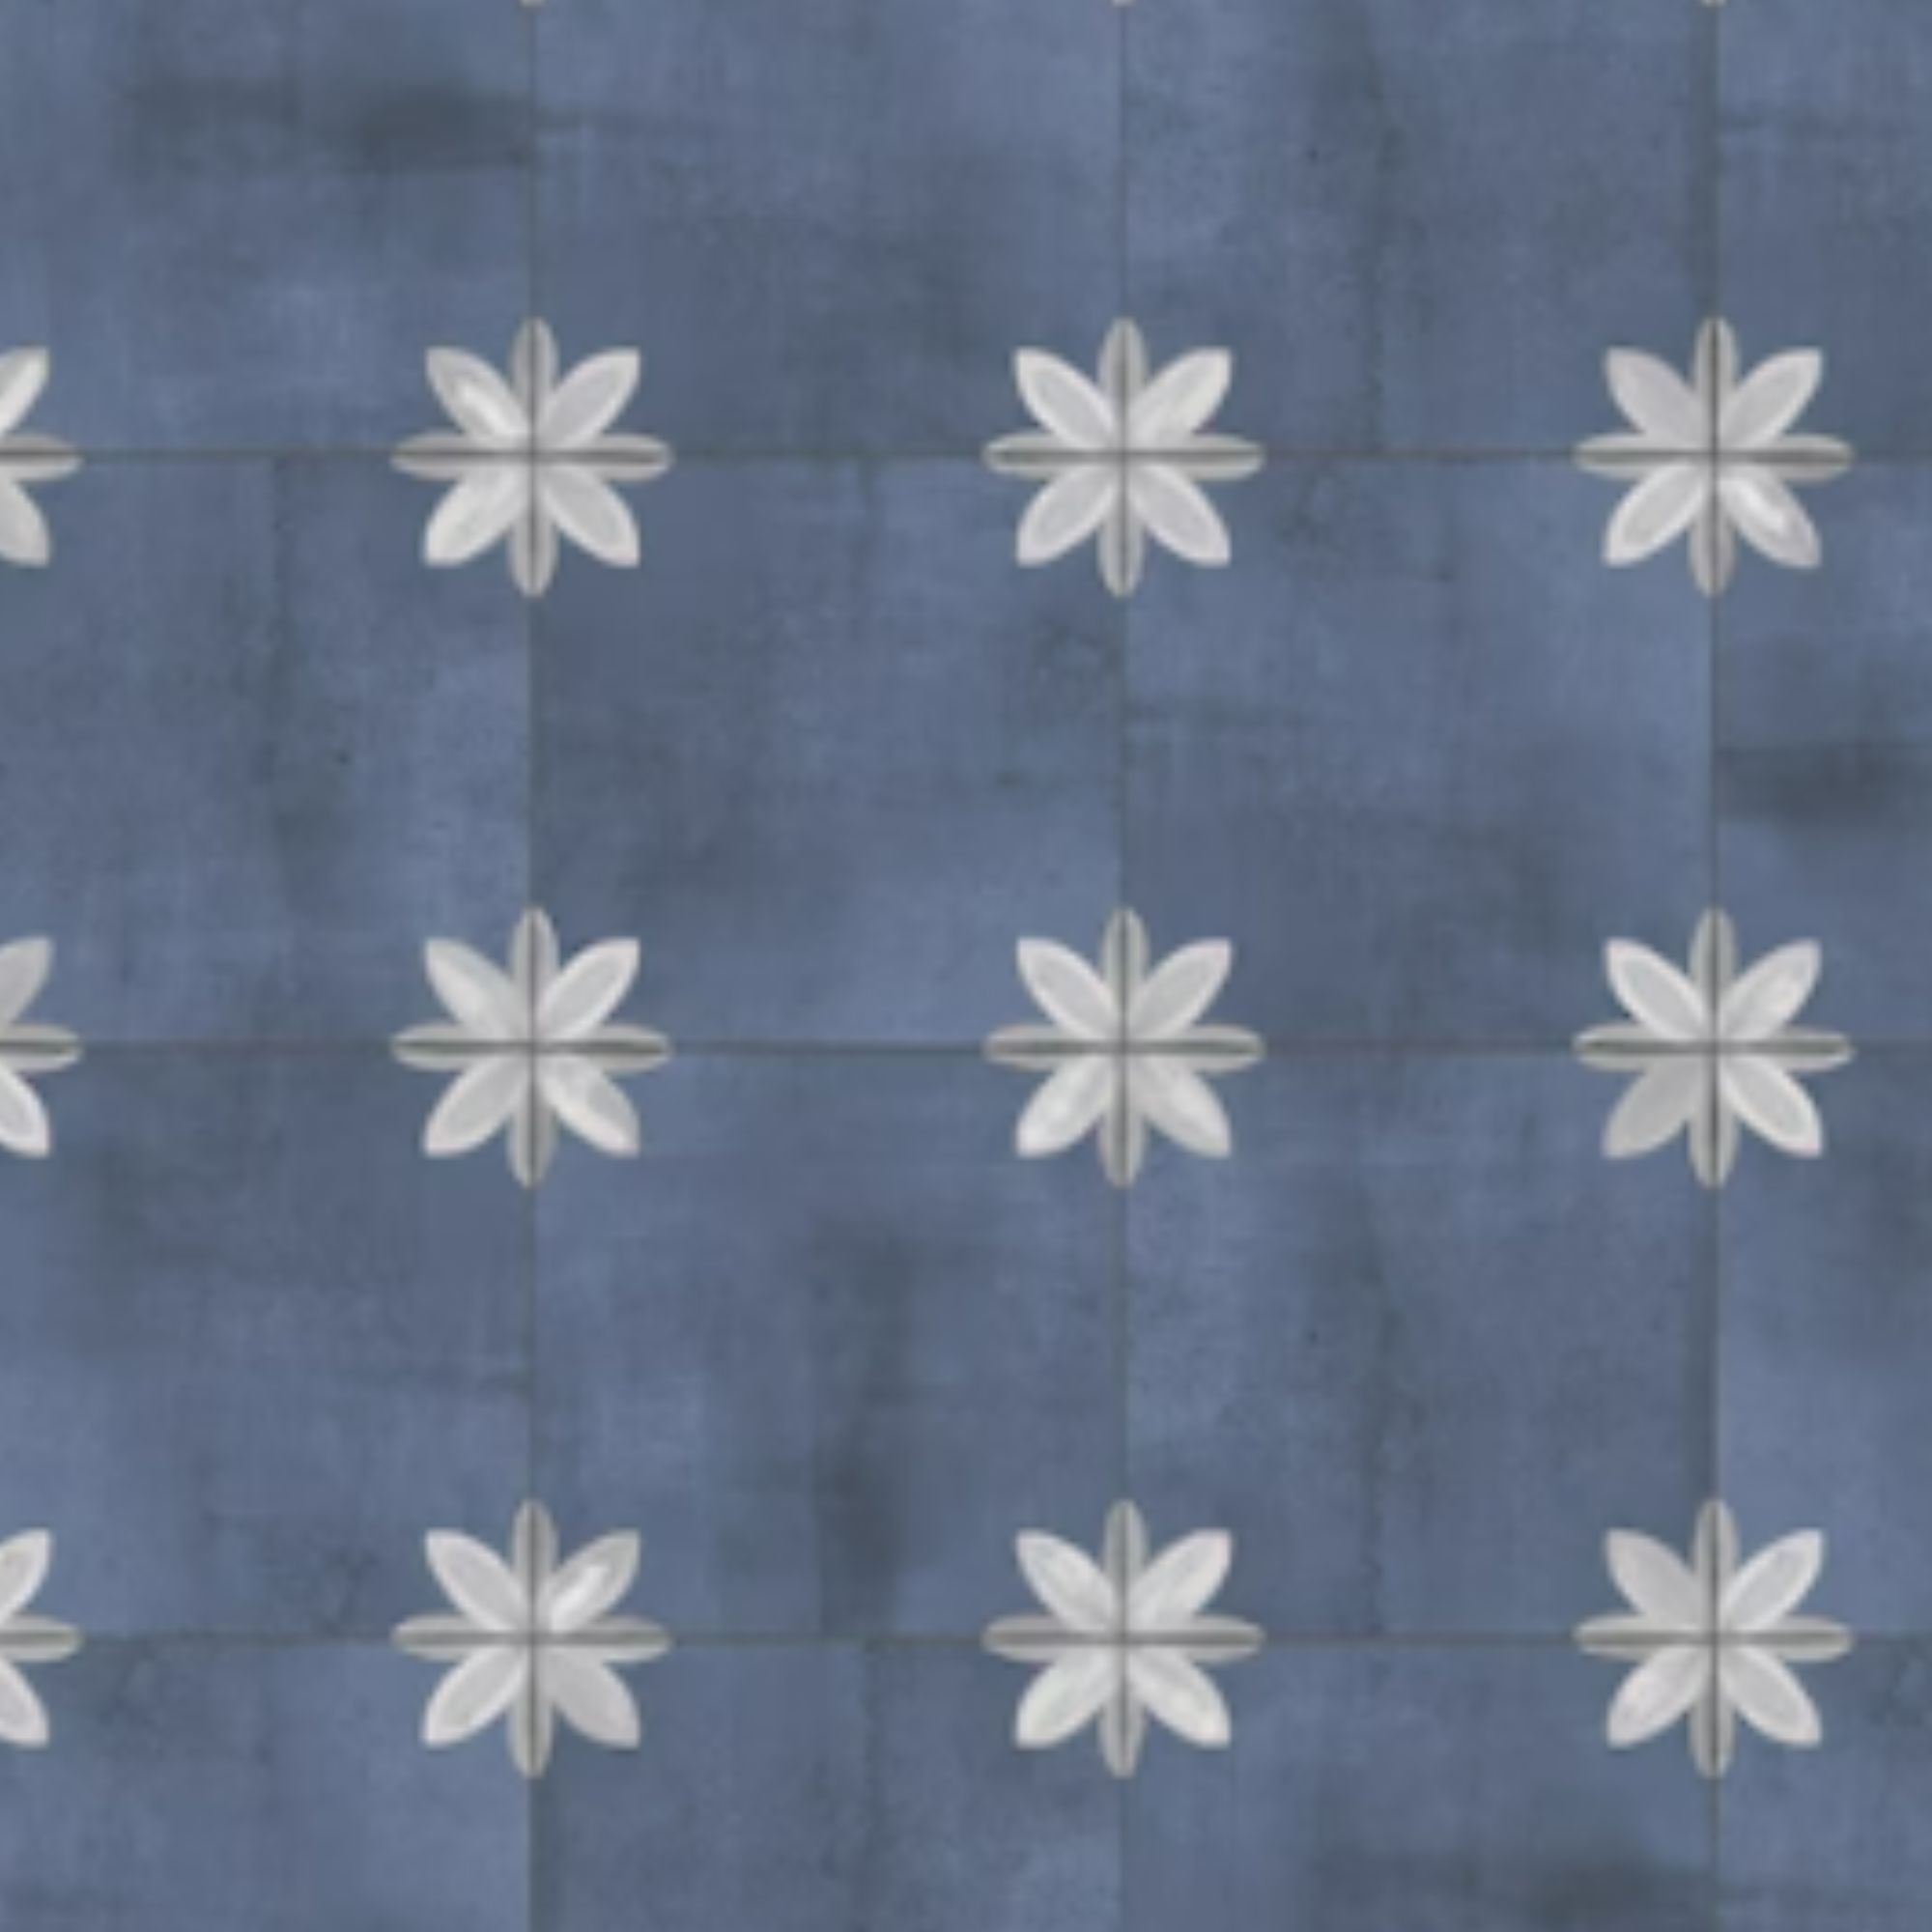 Blue floor tile with floral patterns